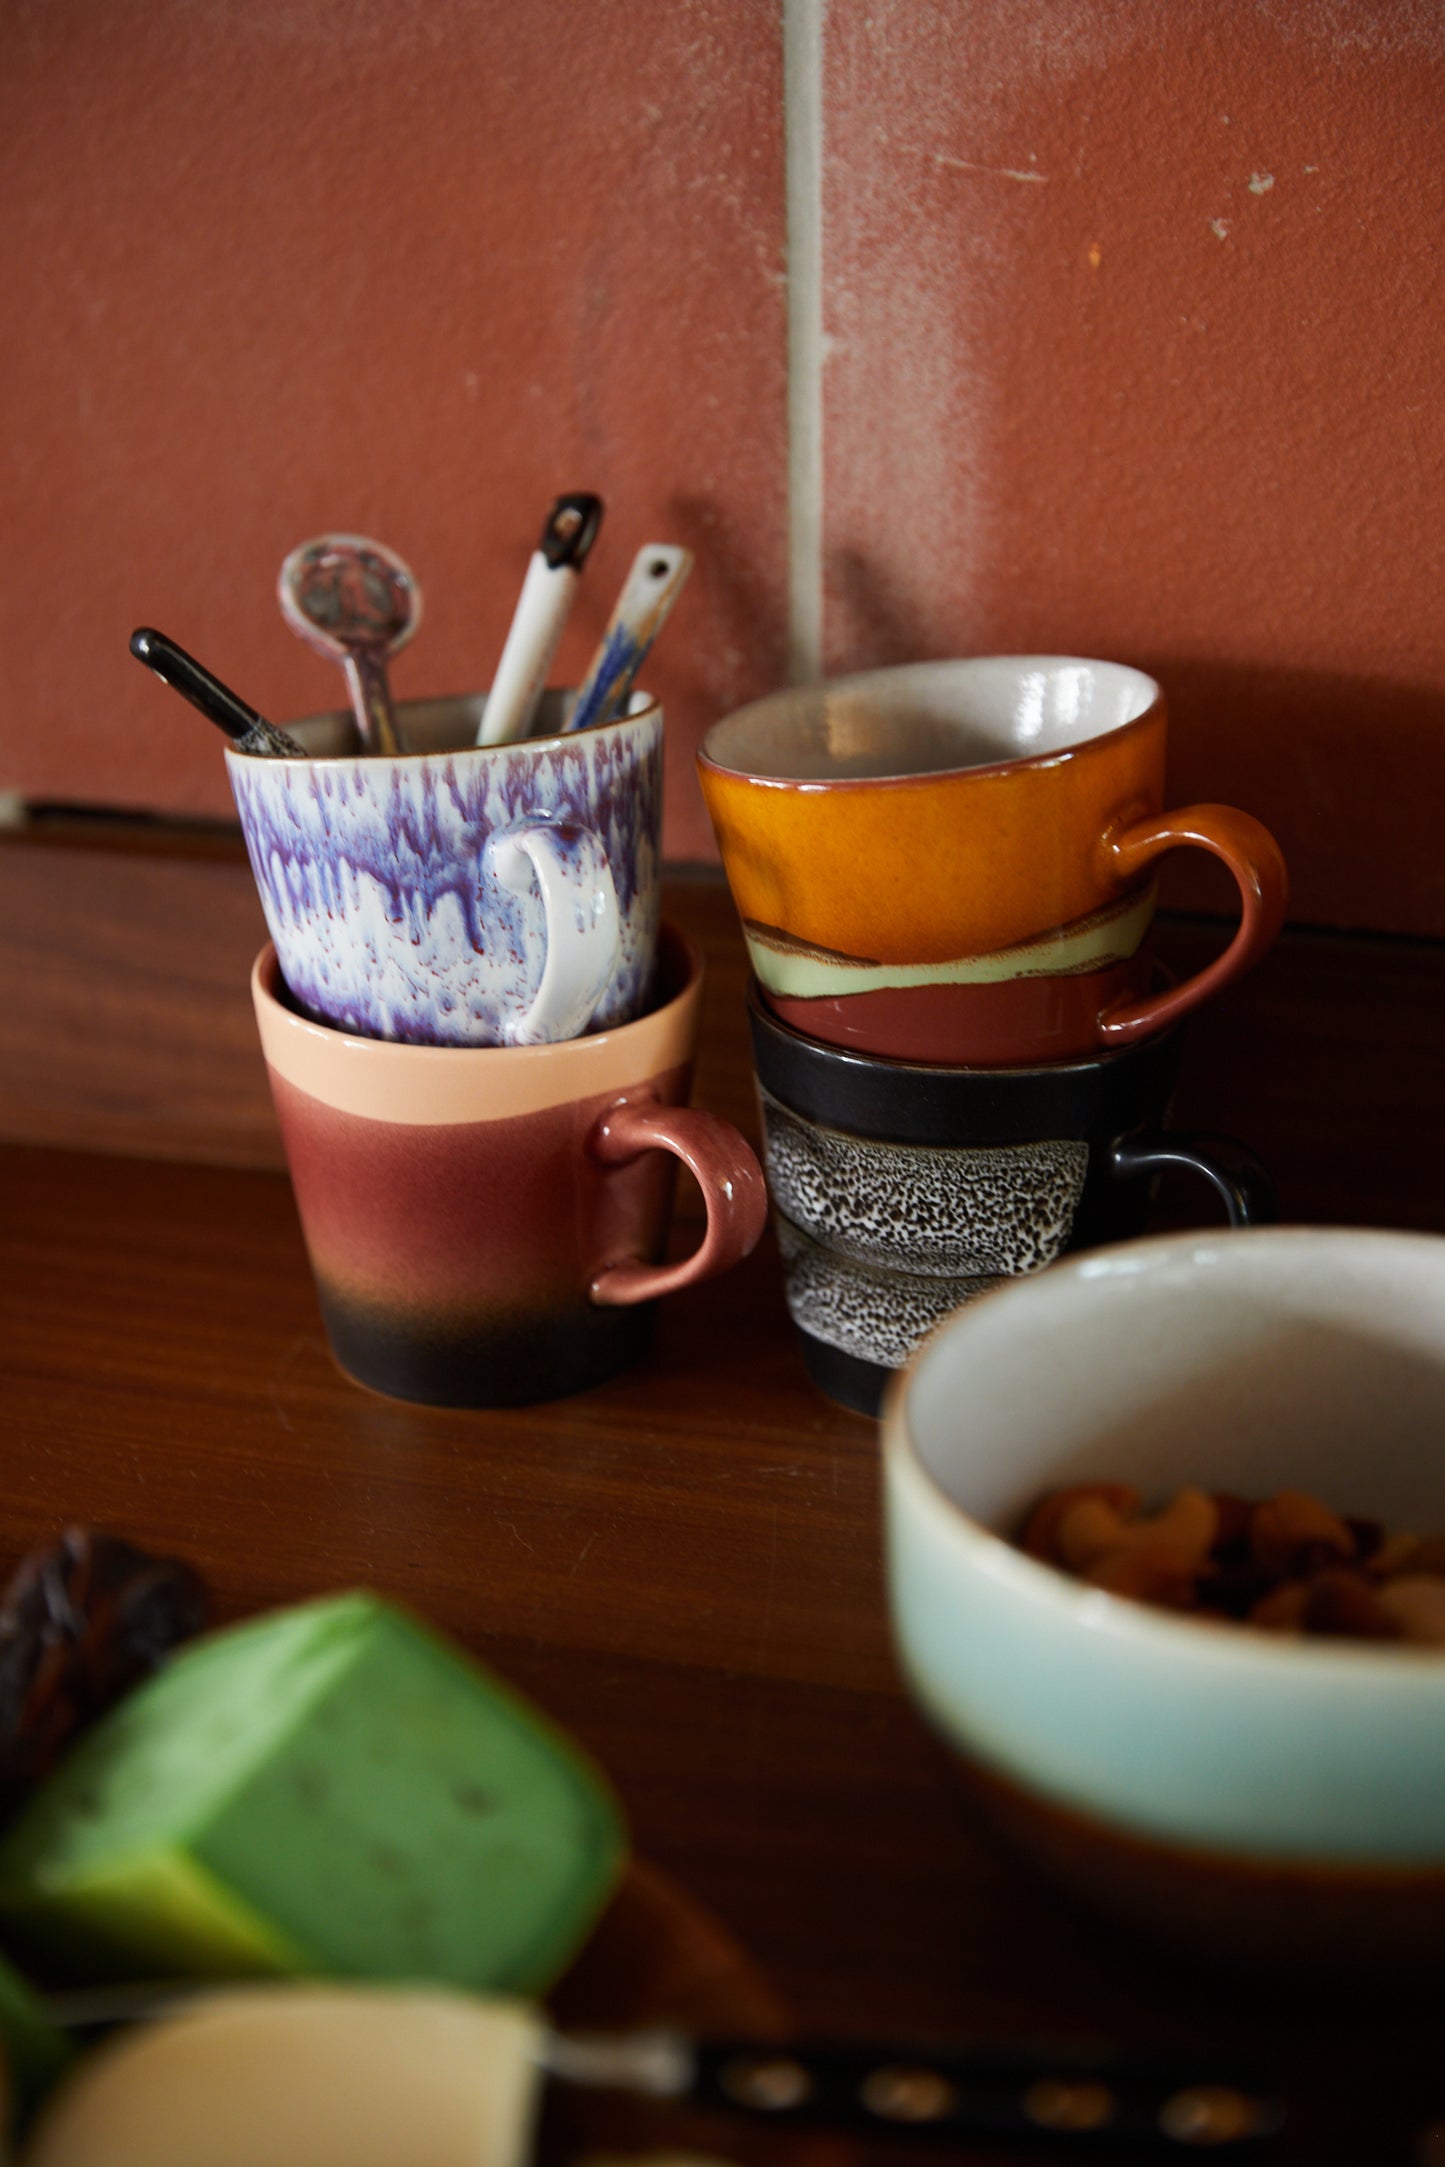 HKliving 70's Ceramics Friction Americano mugs (set of 4)